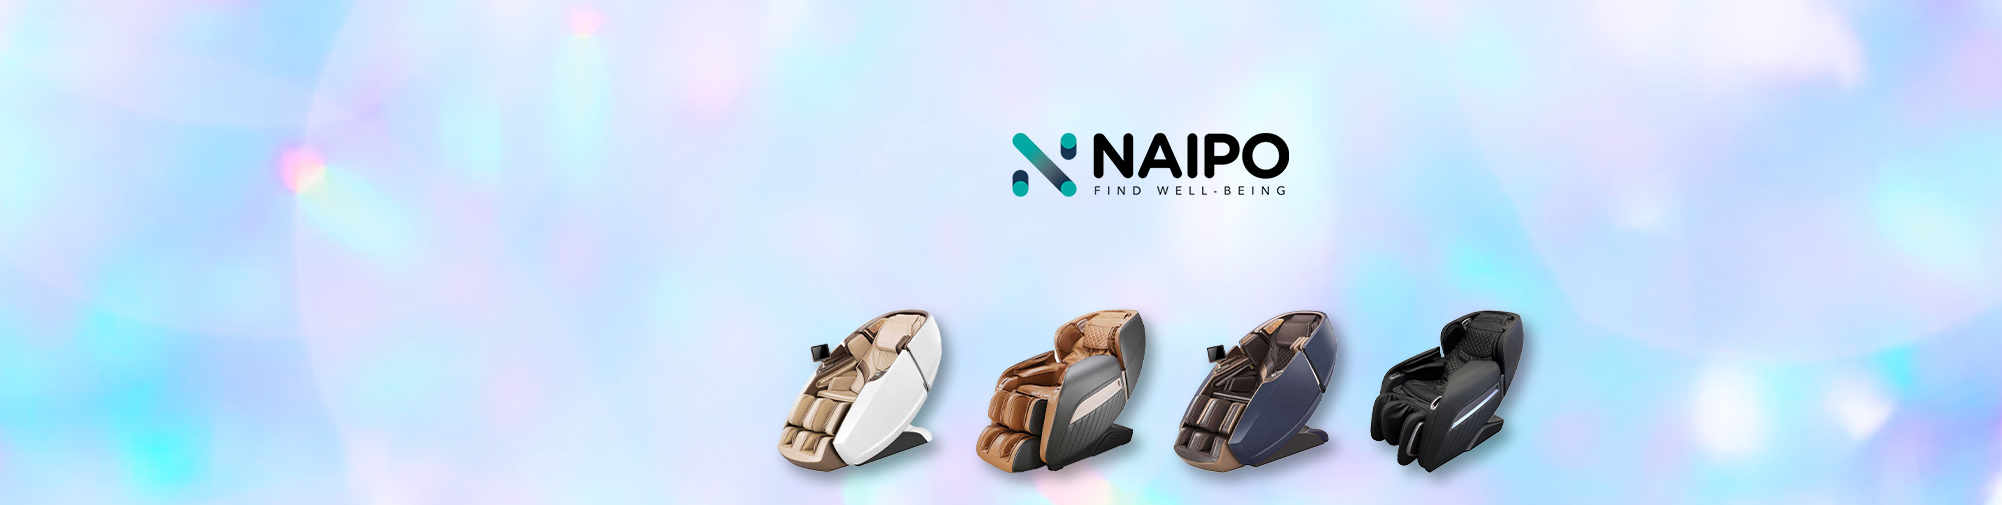 NAIPO - محصولات ماساژ برای تمام جهان | ماساژ صندلی جهان